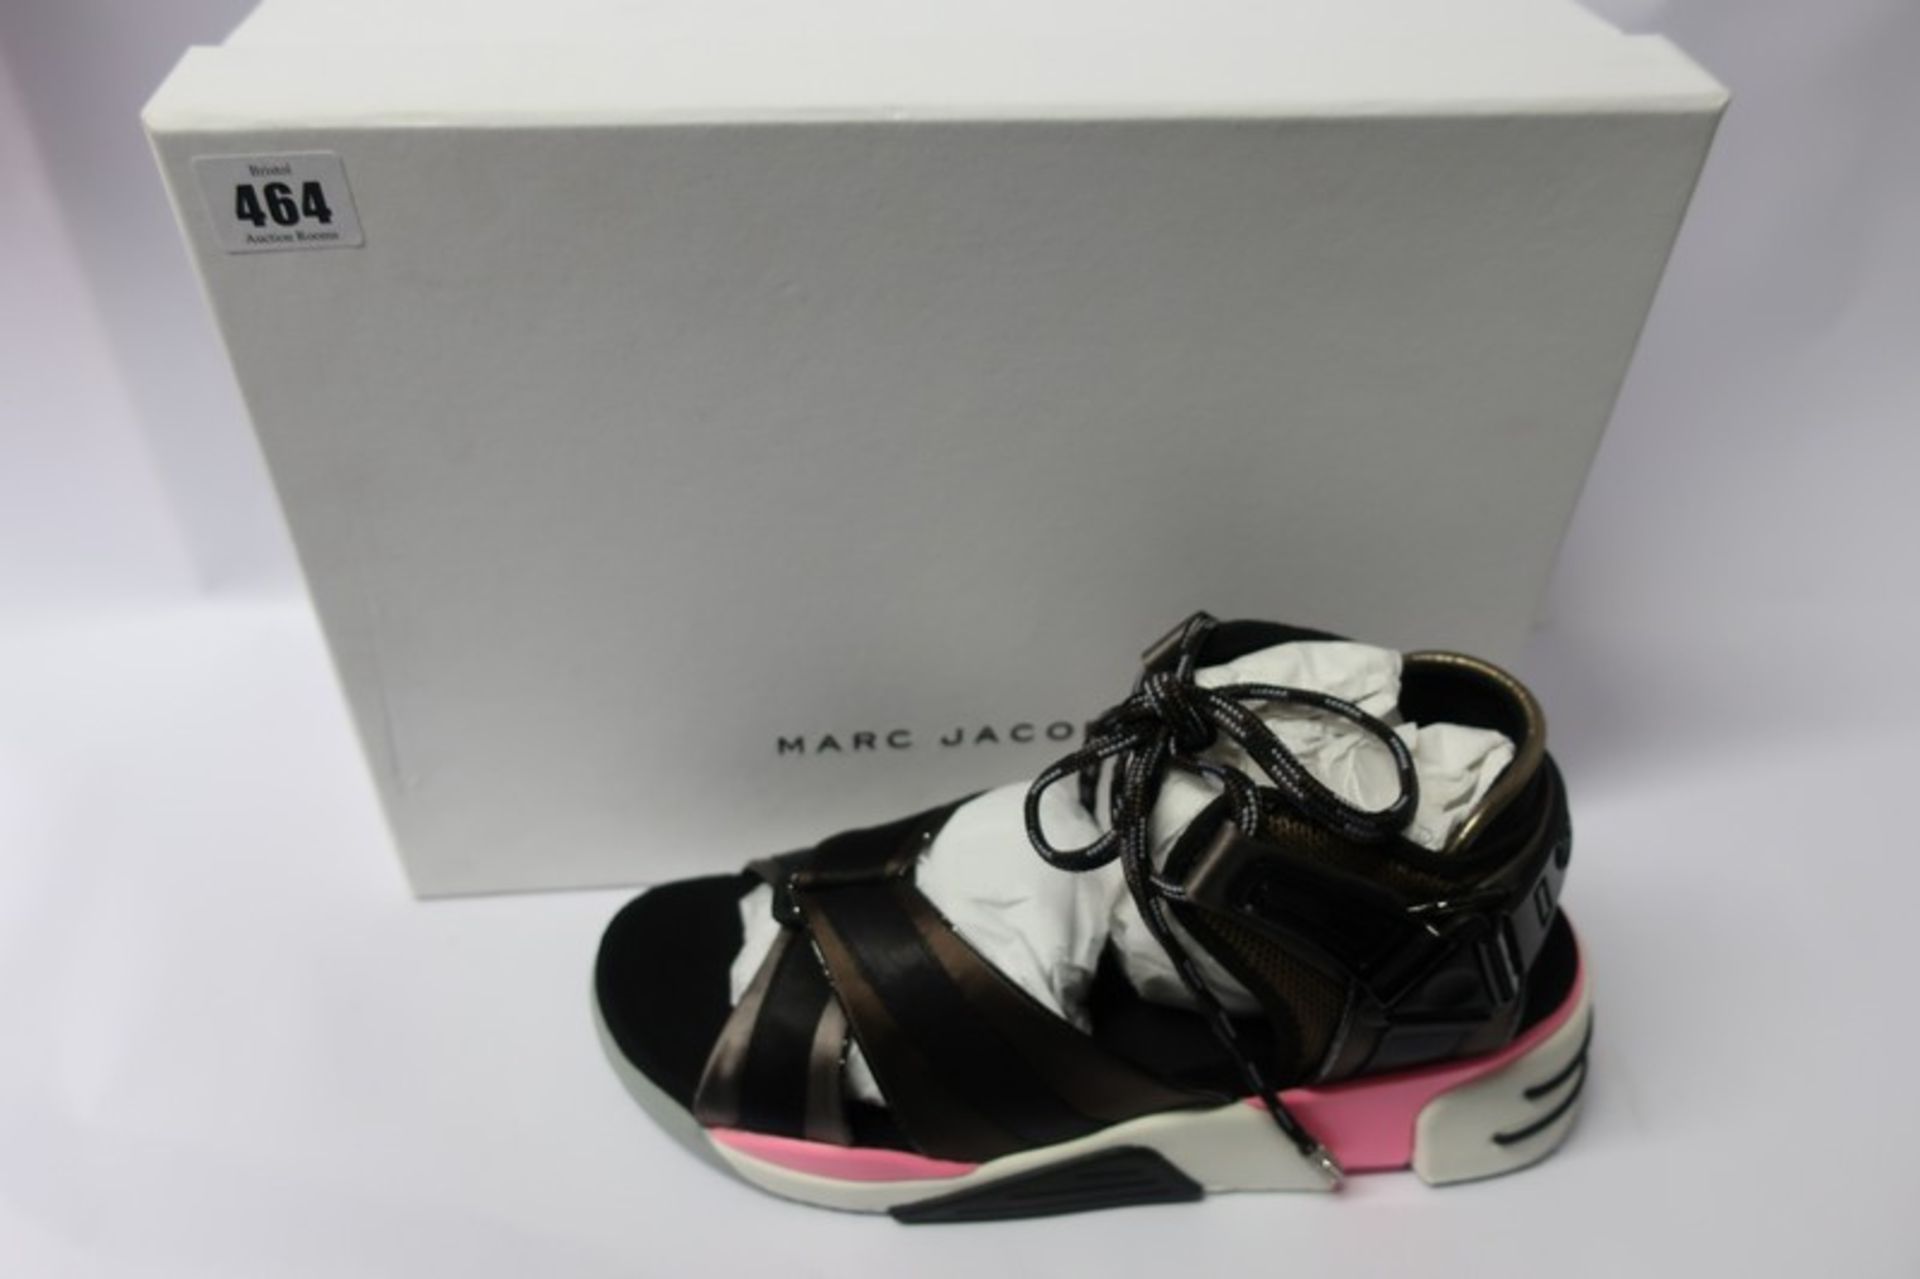 A pair of Marc Jacobs sandals (EU 39).